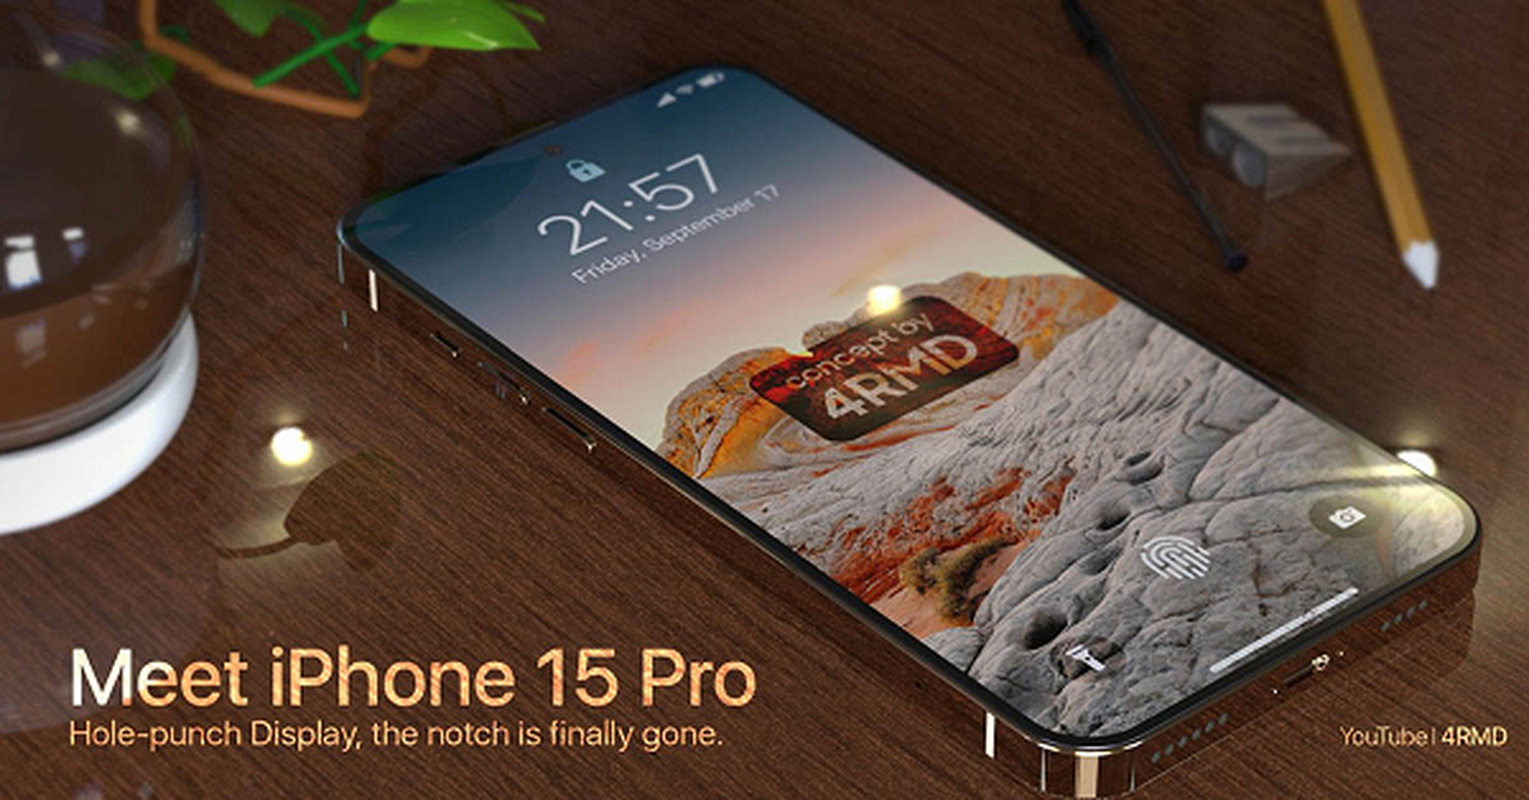 Nong: Lo nhung tinh nang cuc moi se xuat hien tren iPhone 15 Pro-Hinh-7